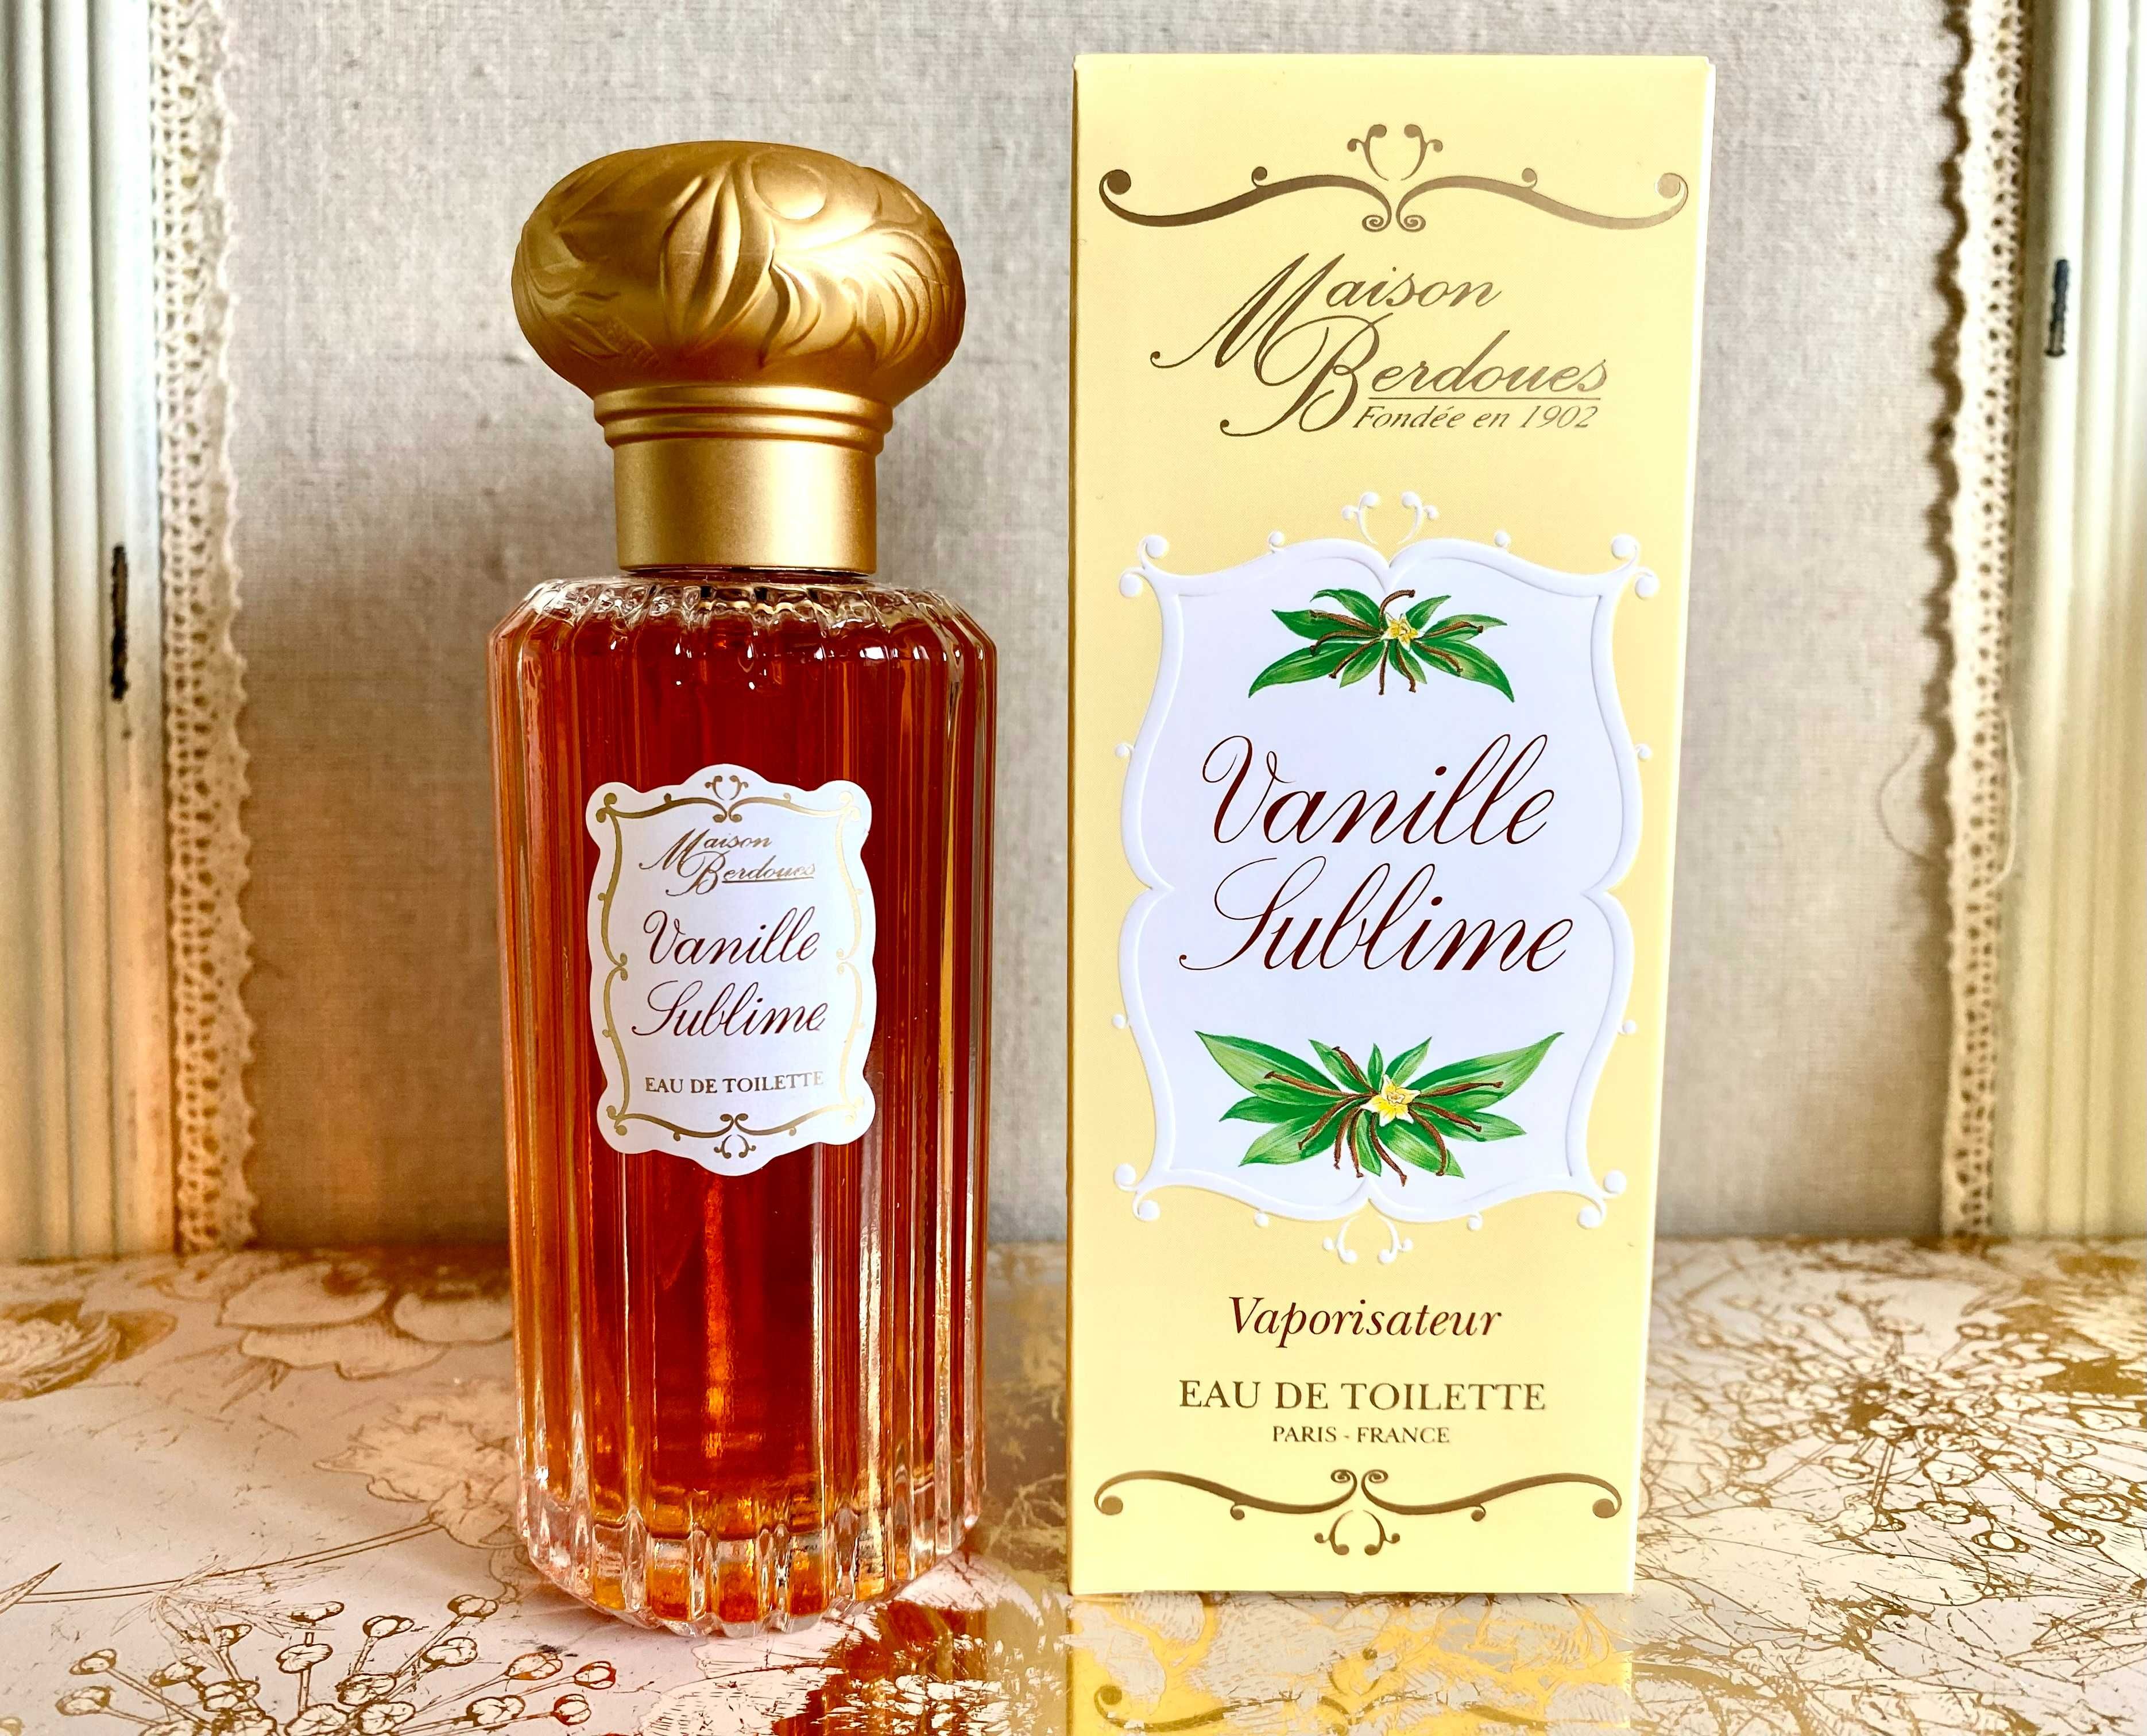 Perfumy Vanille Sublime,Wanilia,Berdoues,100 ml